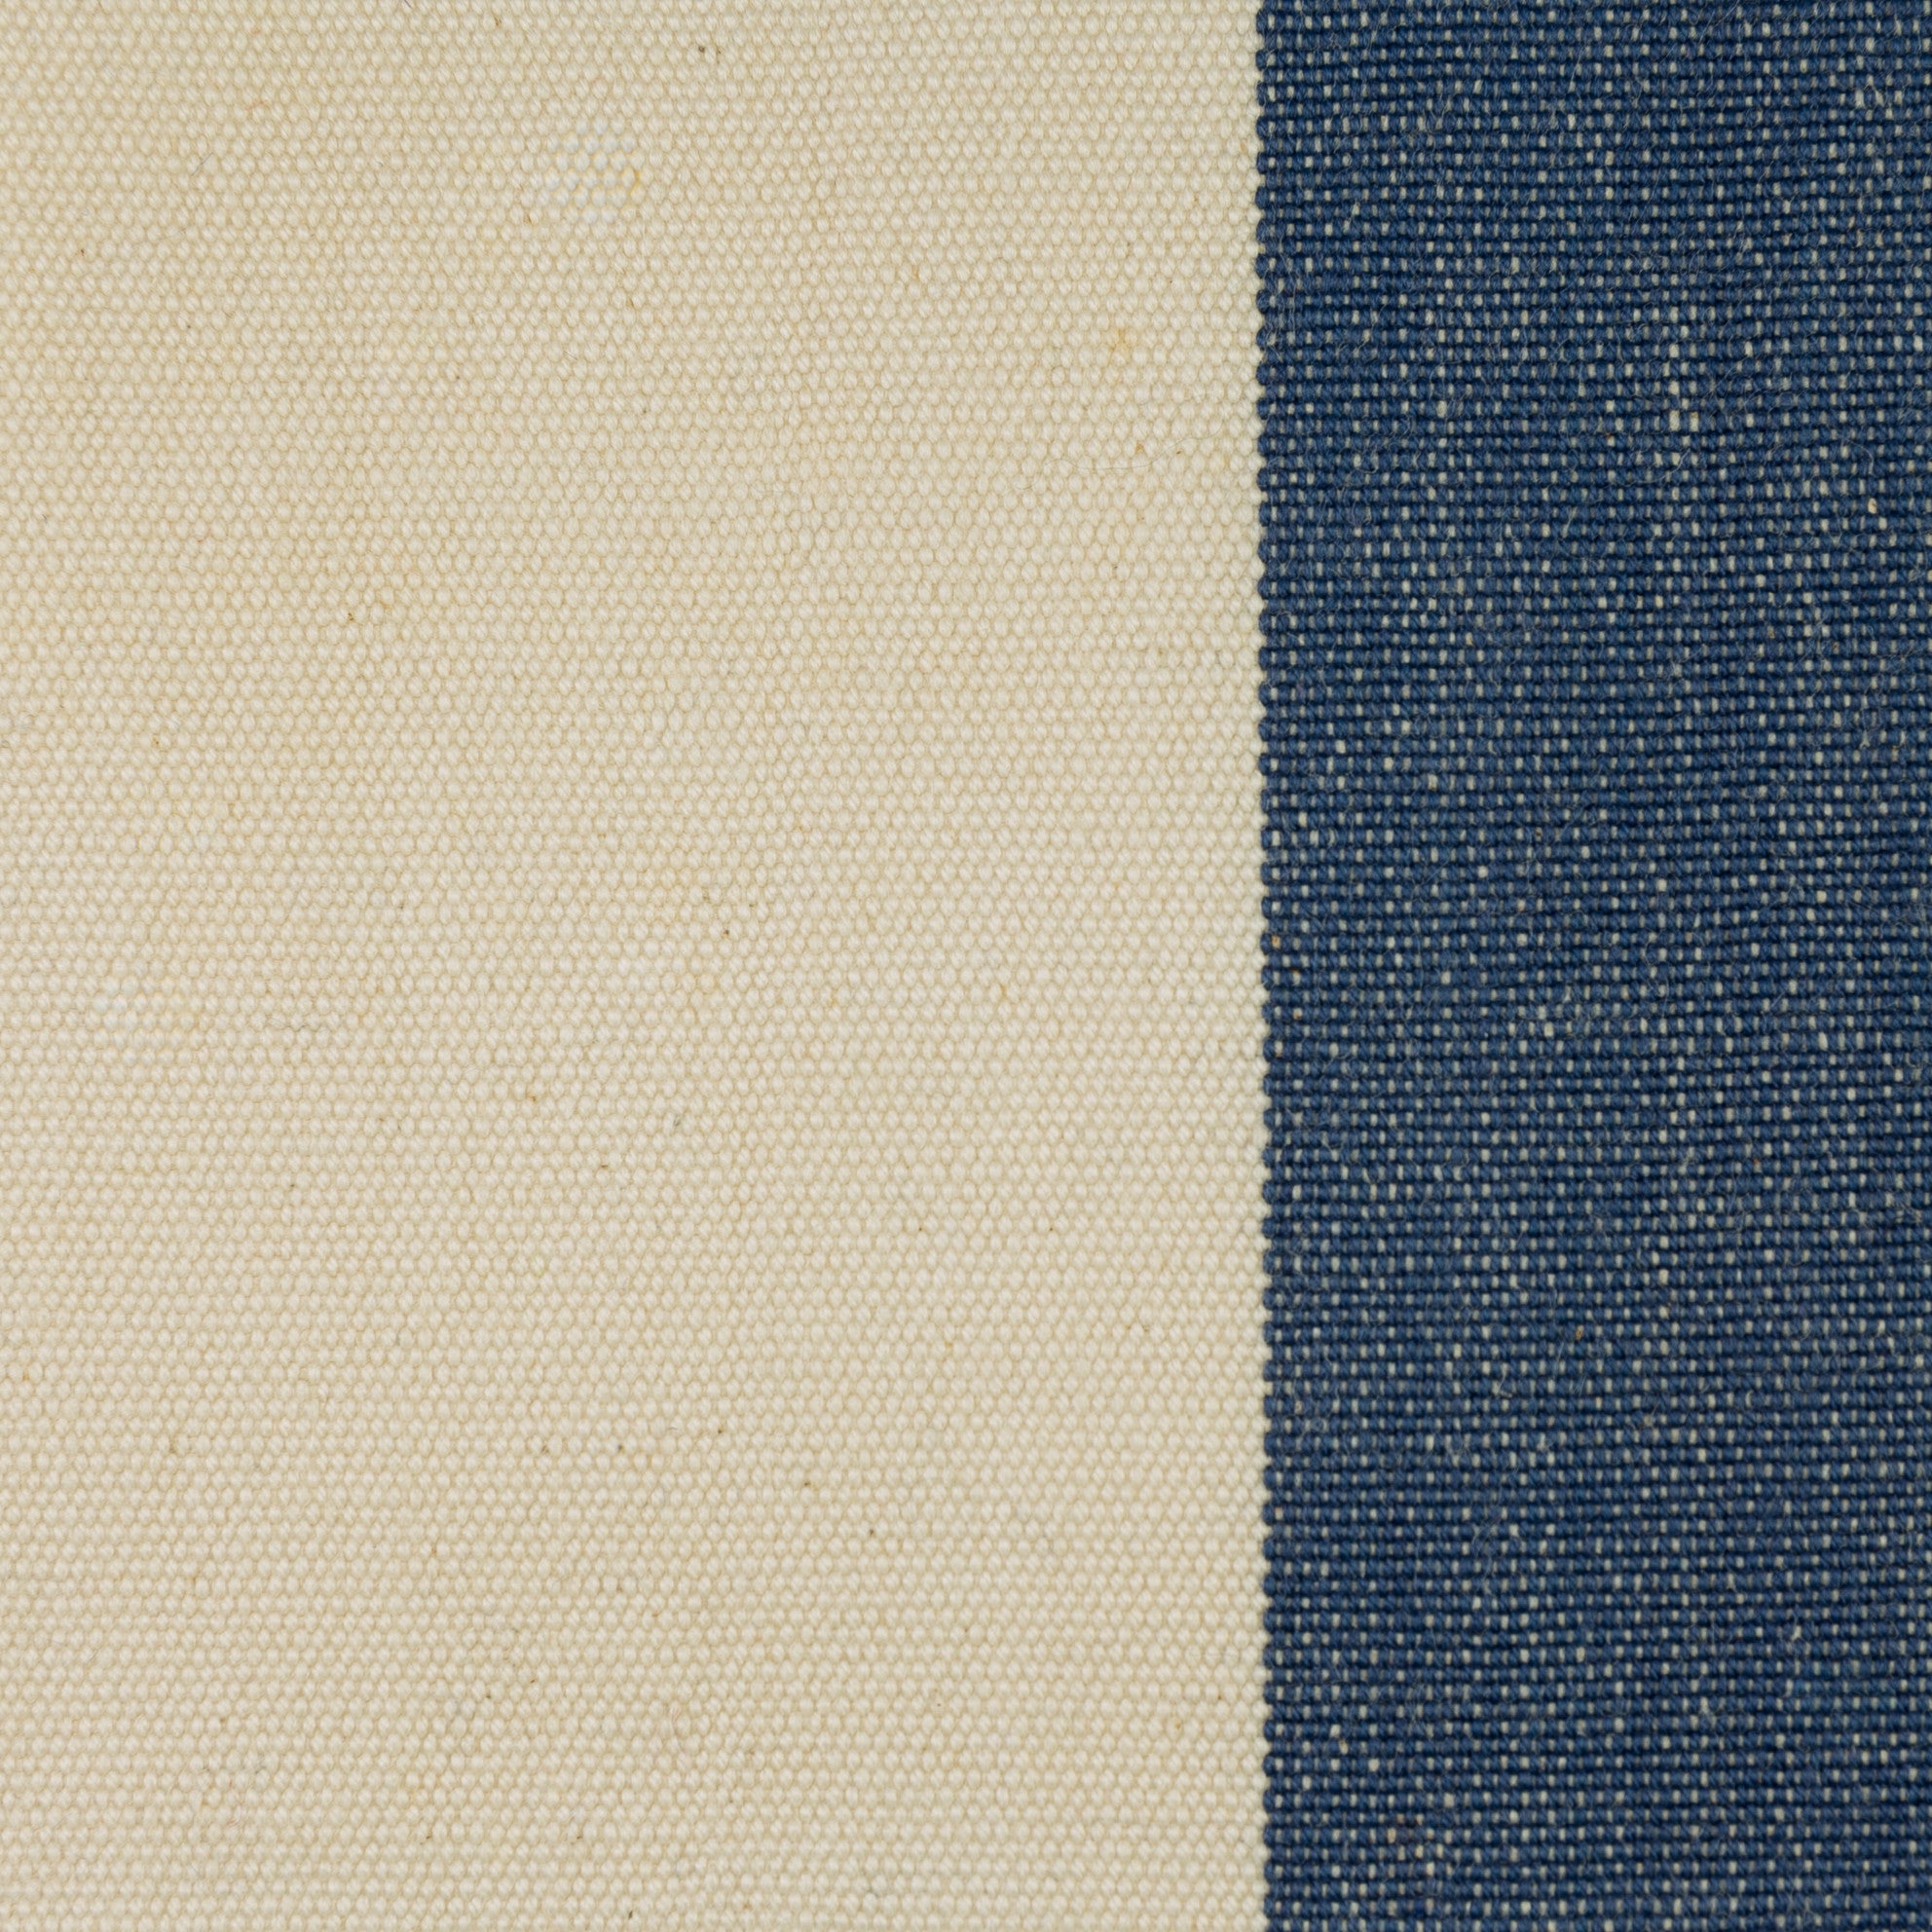 Woven Striped Fabric - Lizard 39/031 Mood Indigo | Nicholas Engert Interiors